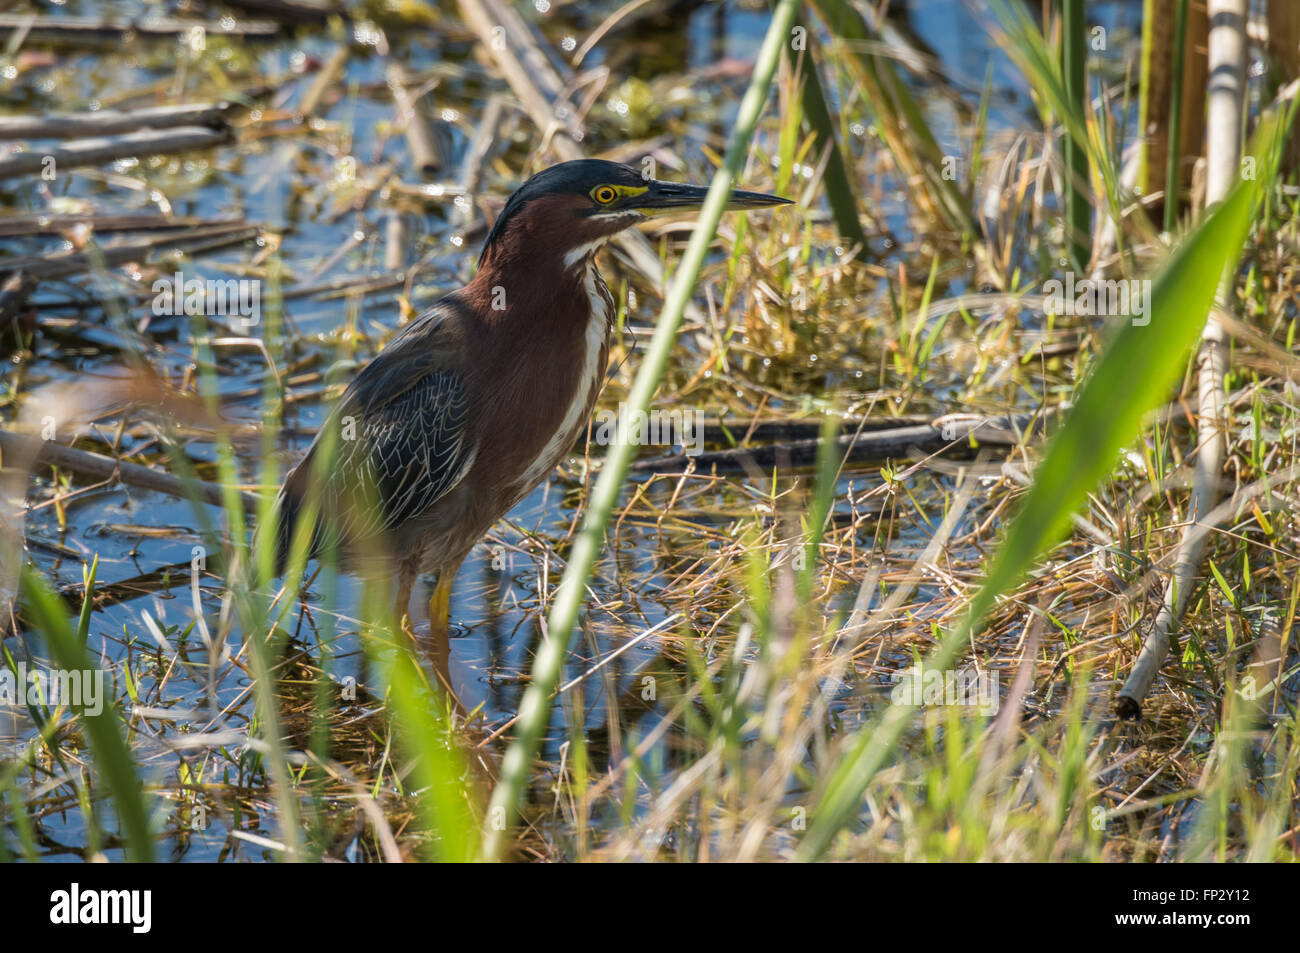 Green Heron feeding in marsh grasses Stock Photo